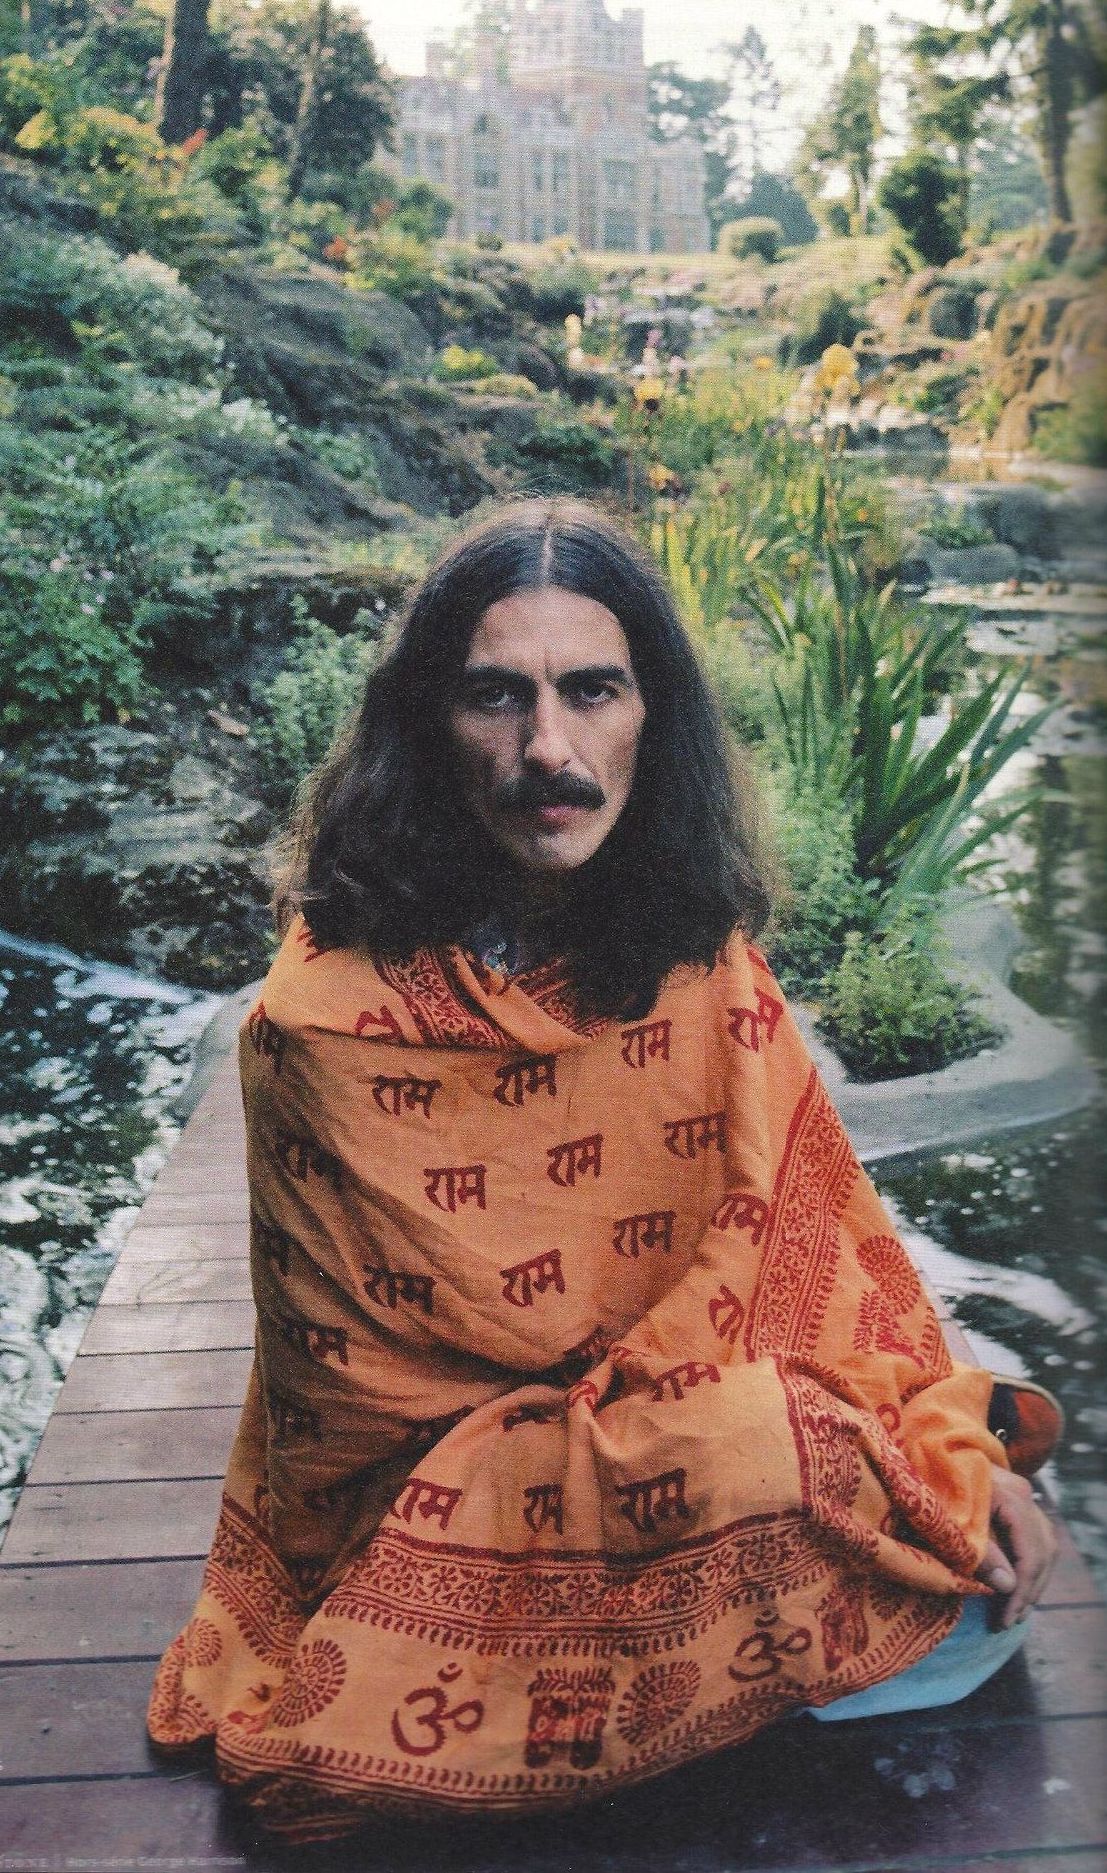 George Harrison at Friar Park 1975